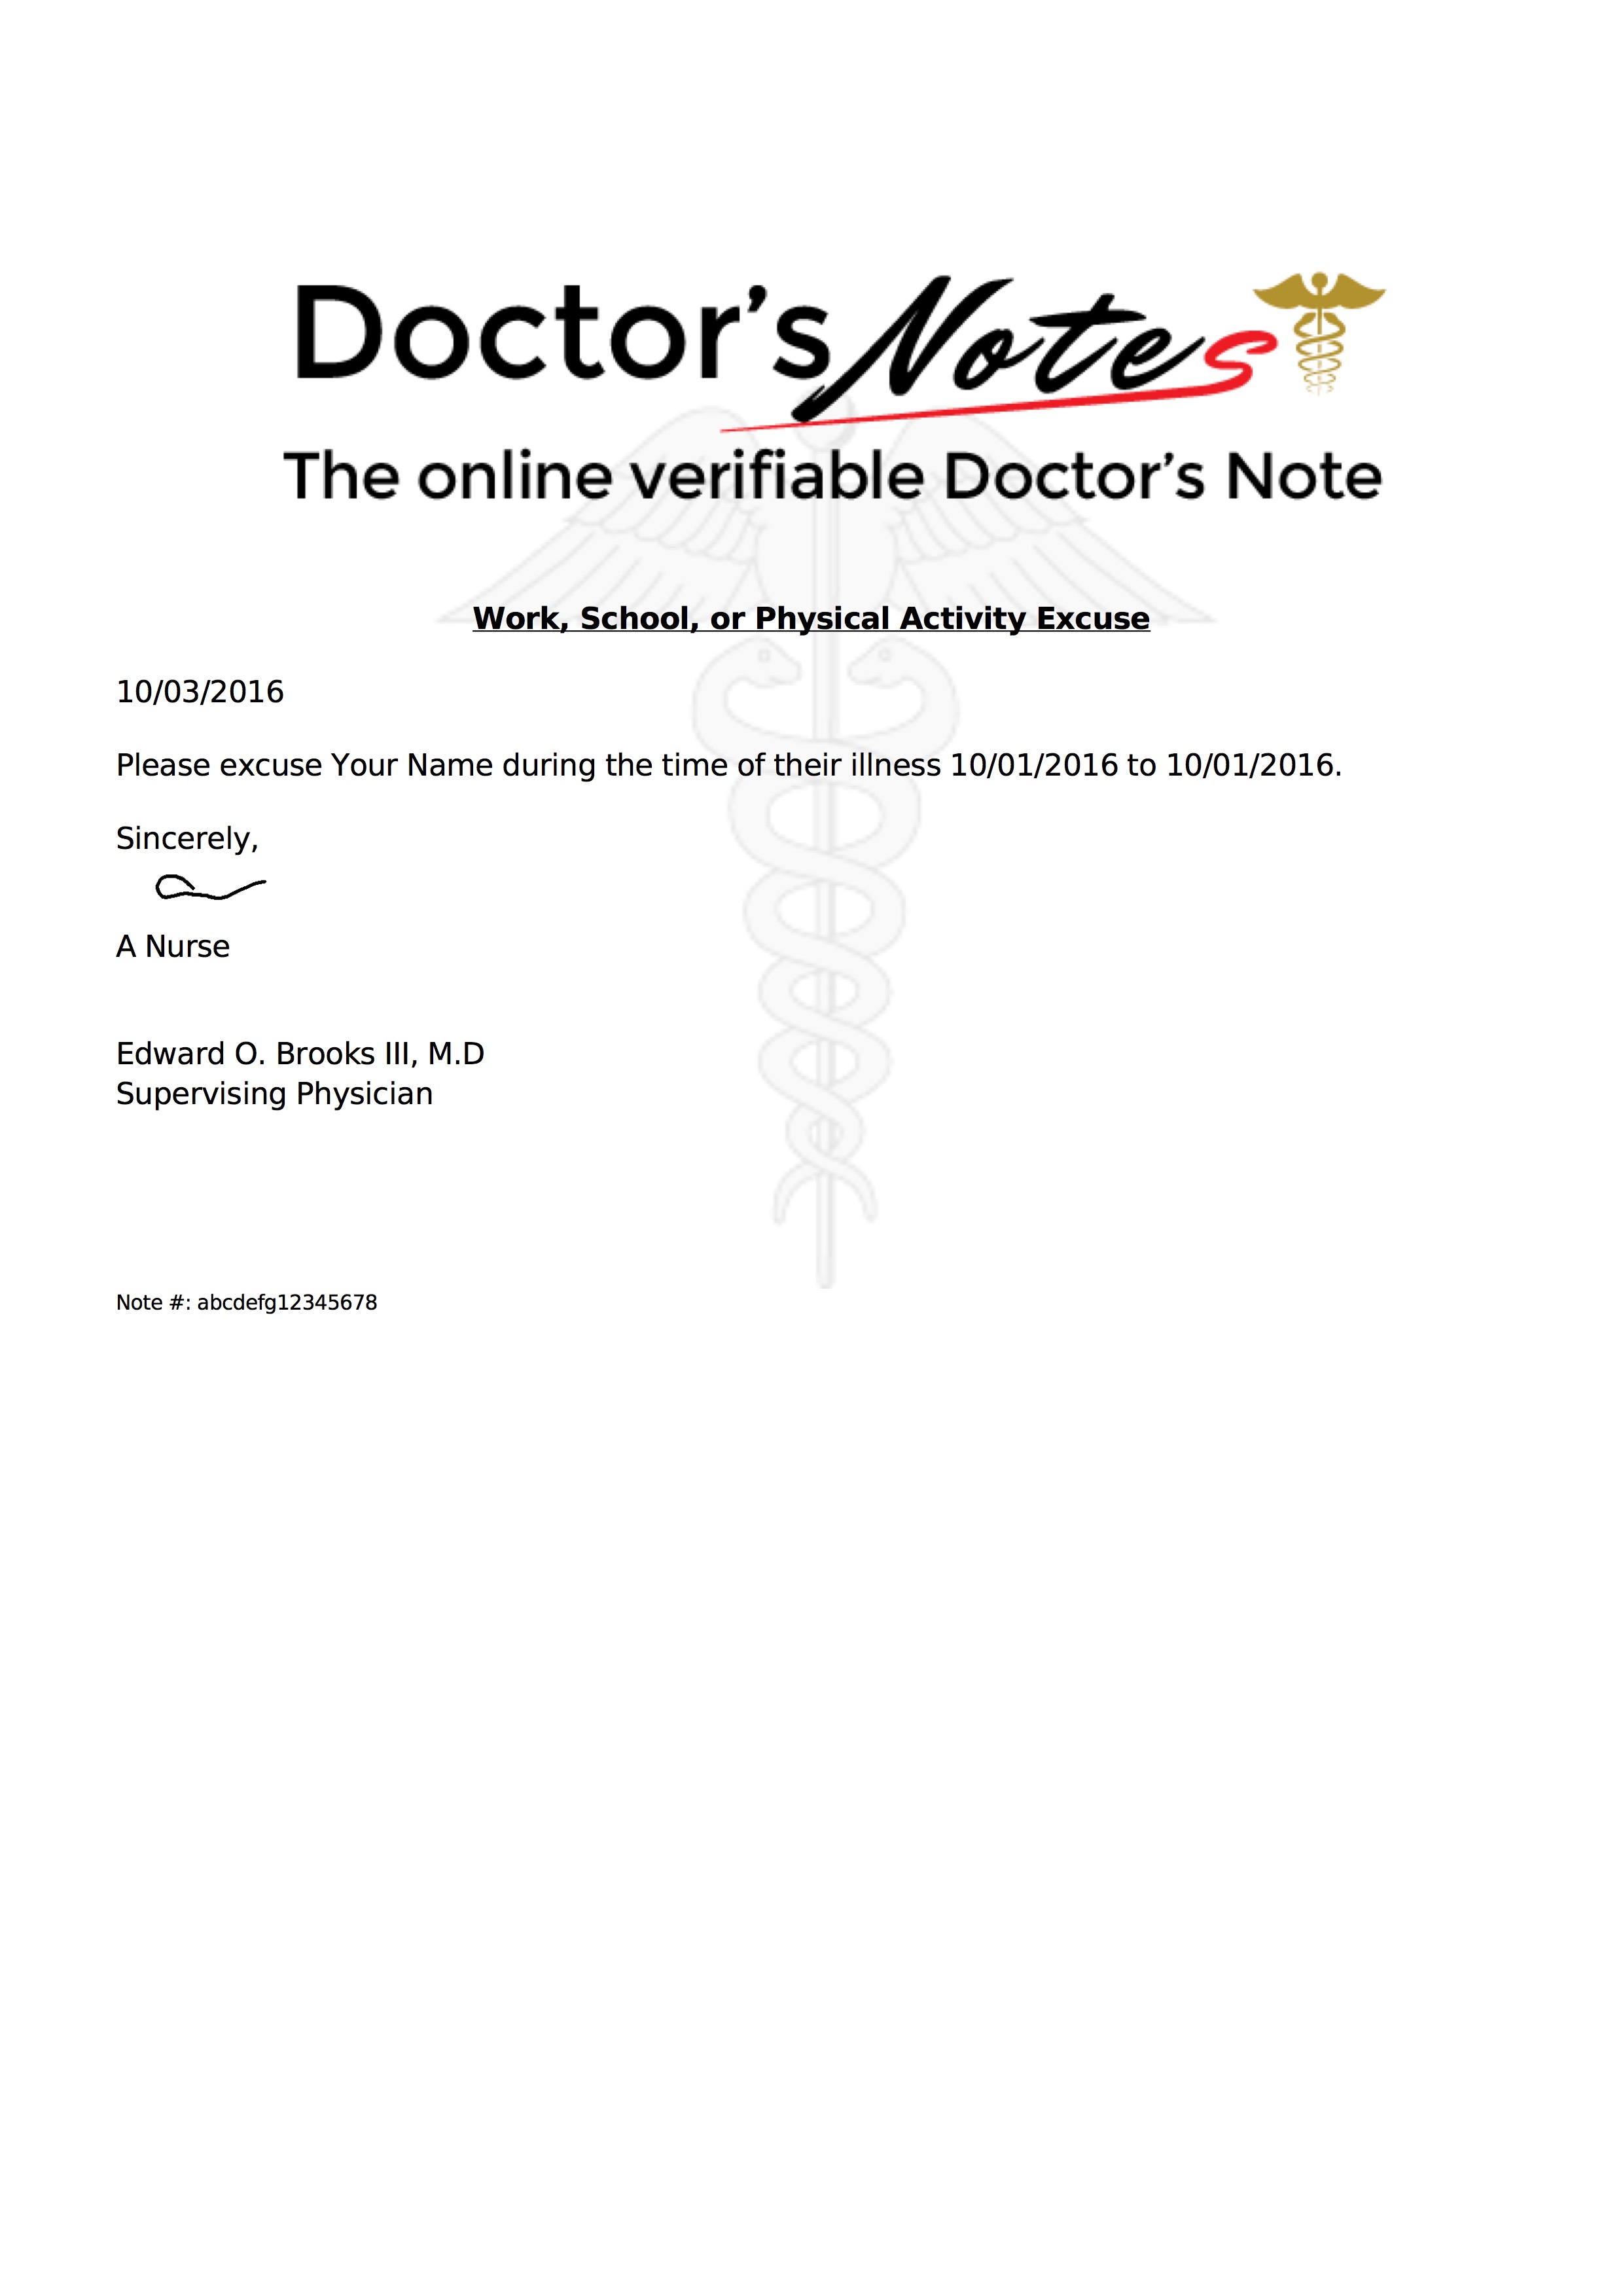 doctorsnote-real-online-doctor-s-notes